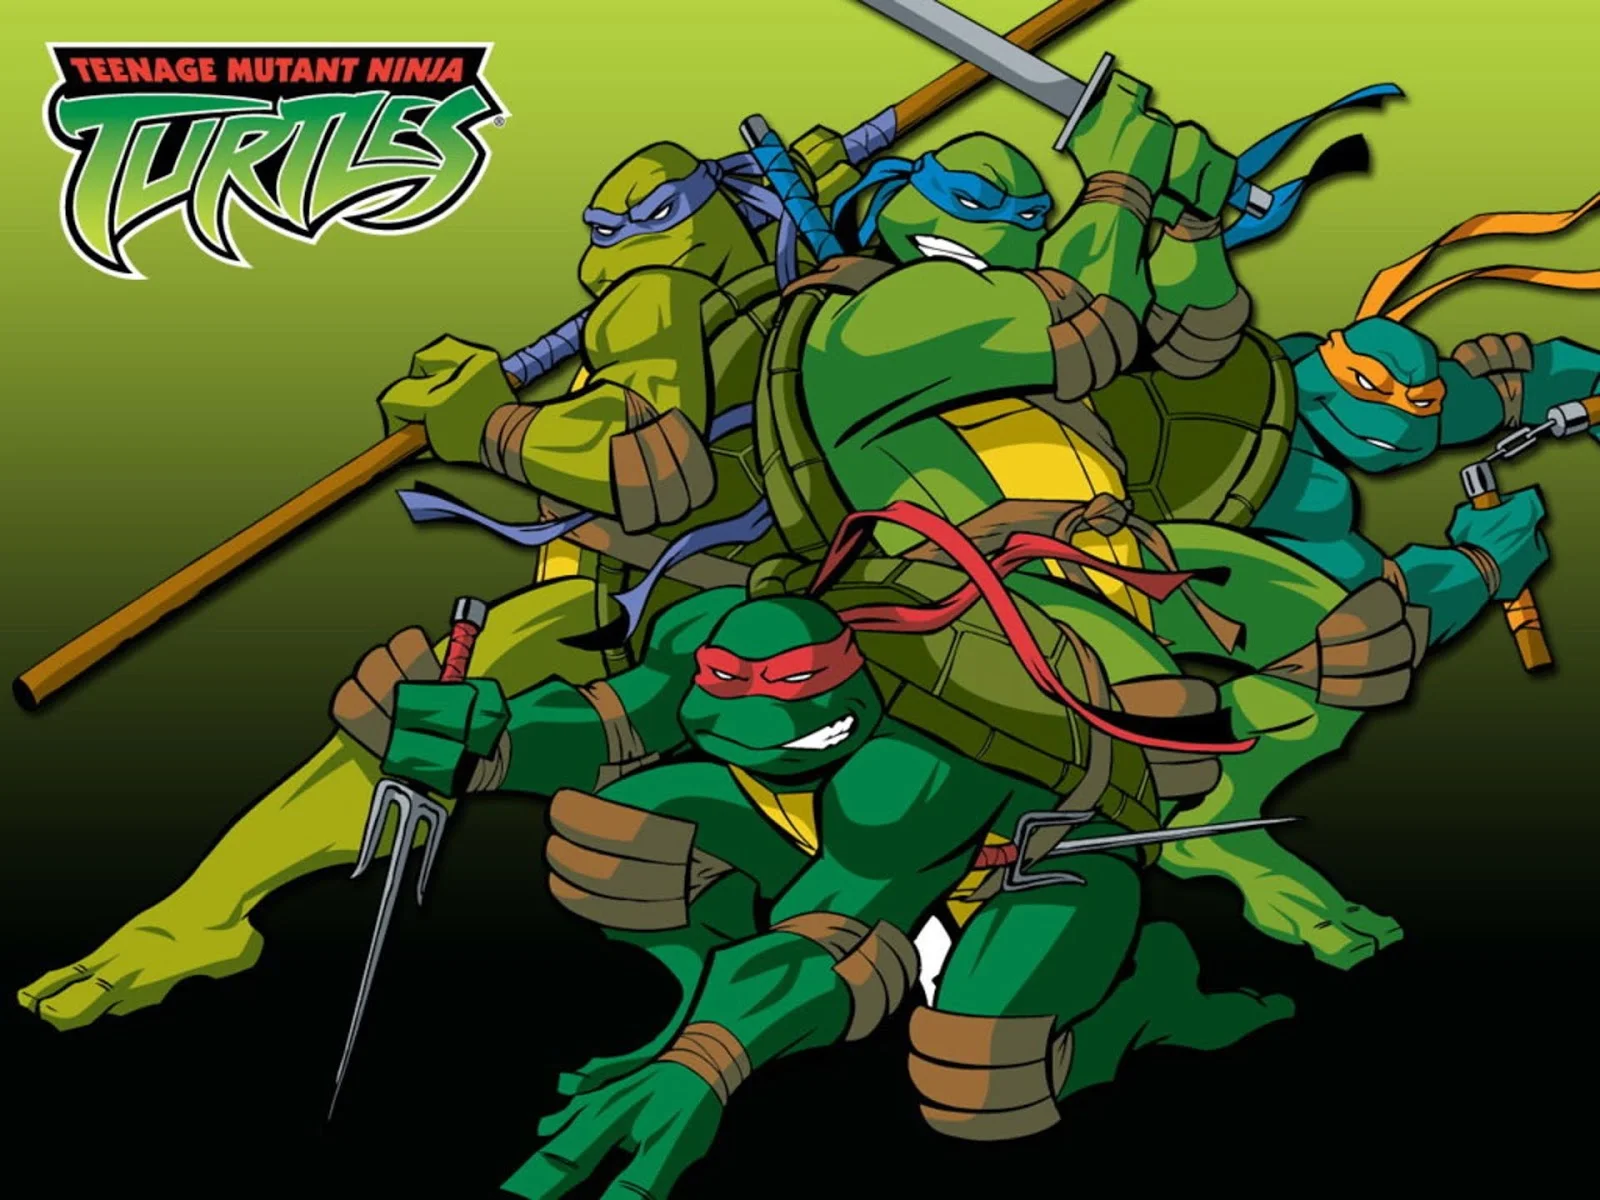 Ver Las Tortugas Ninja (2003) Online